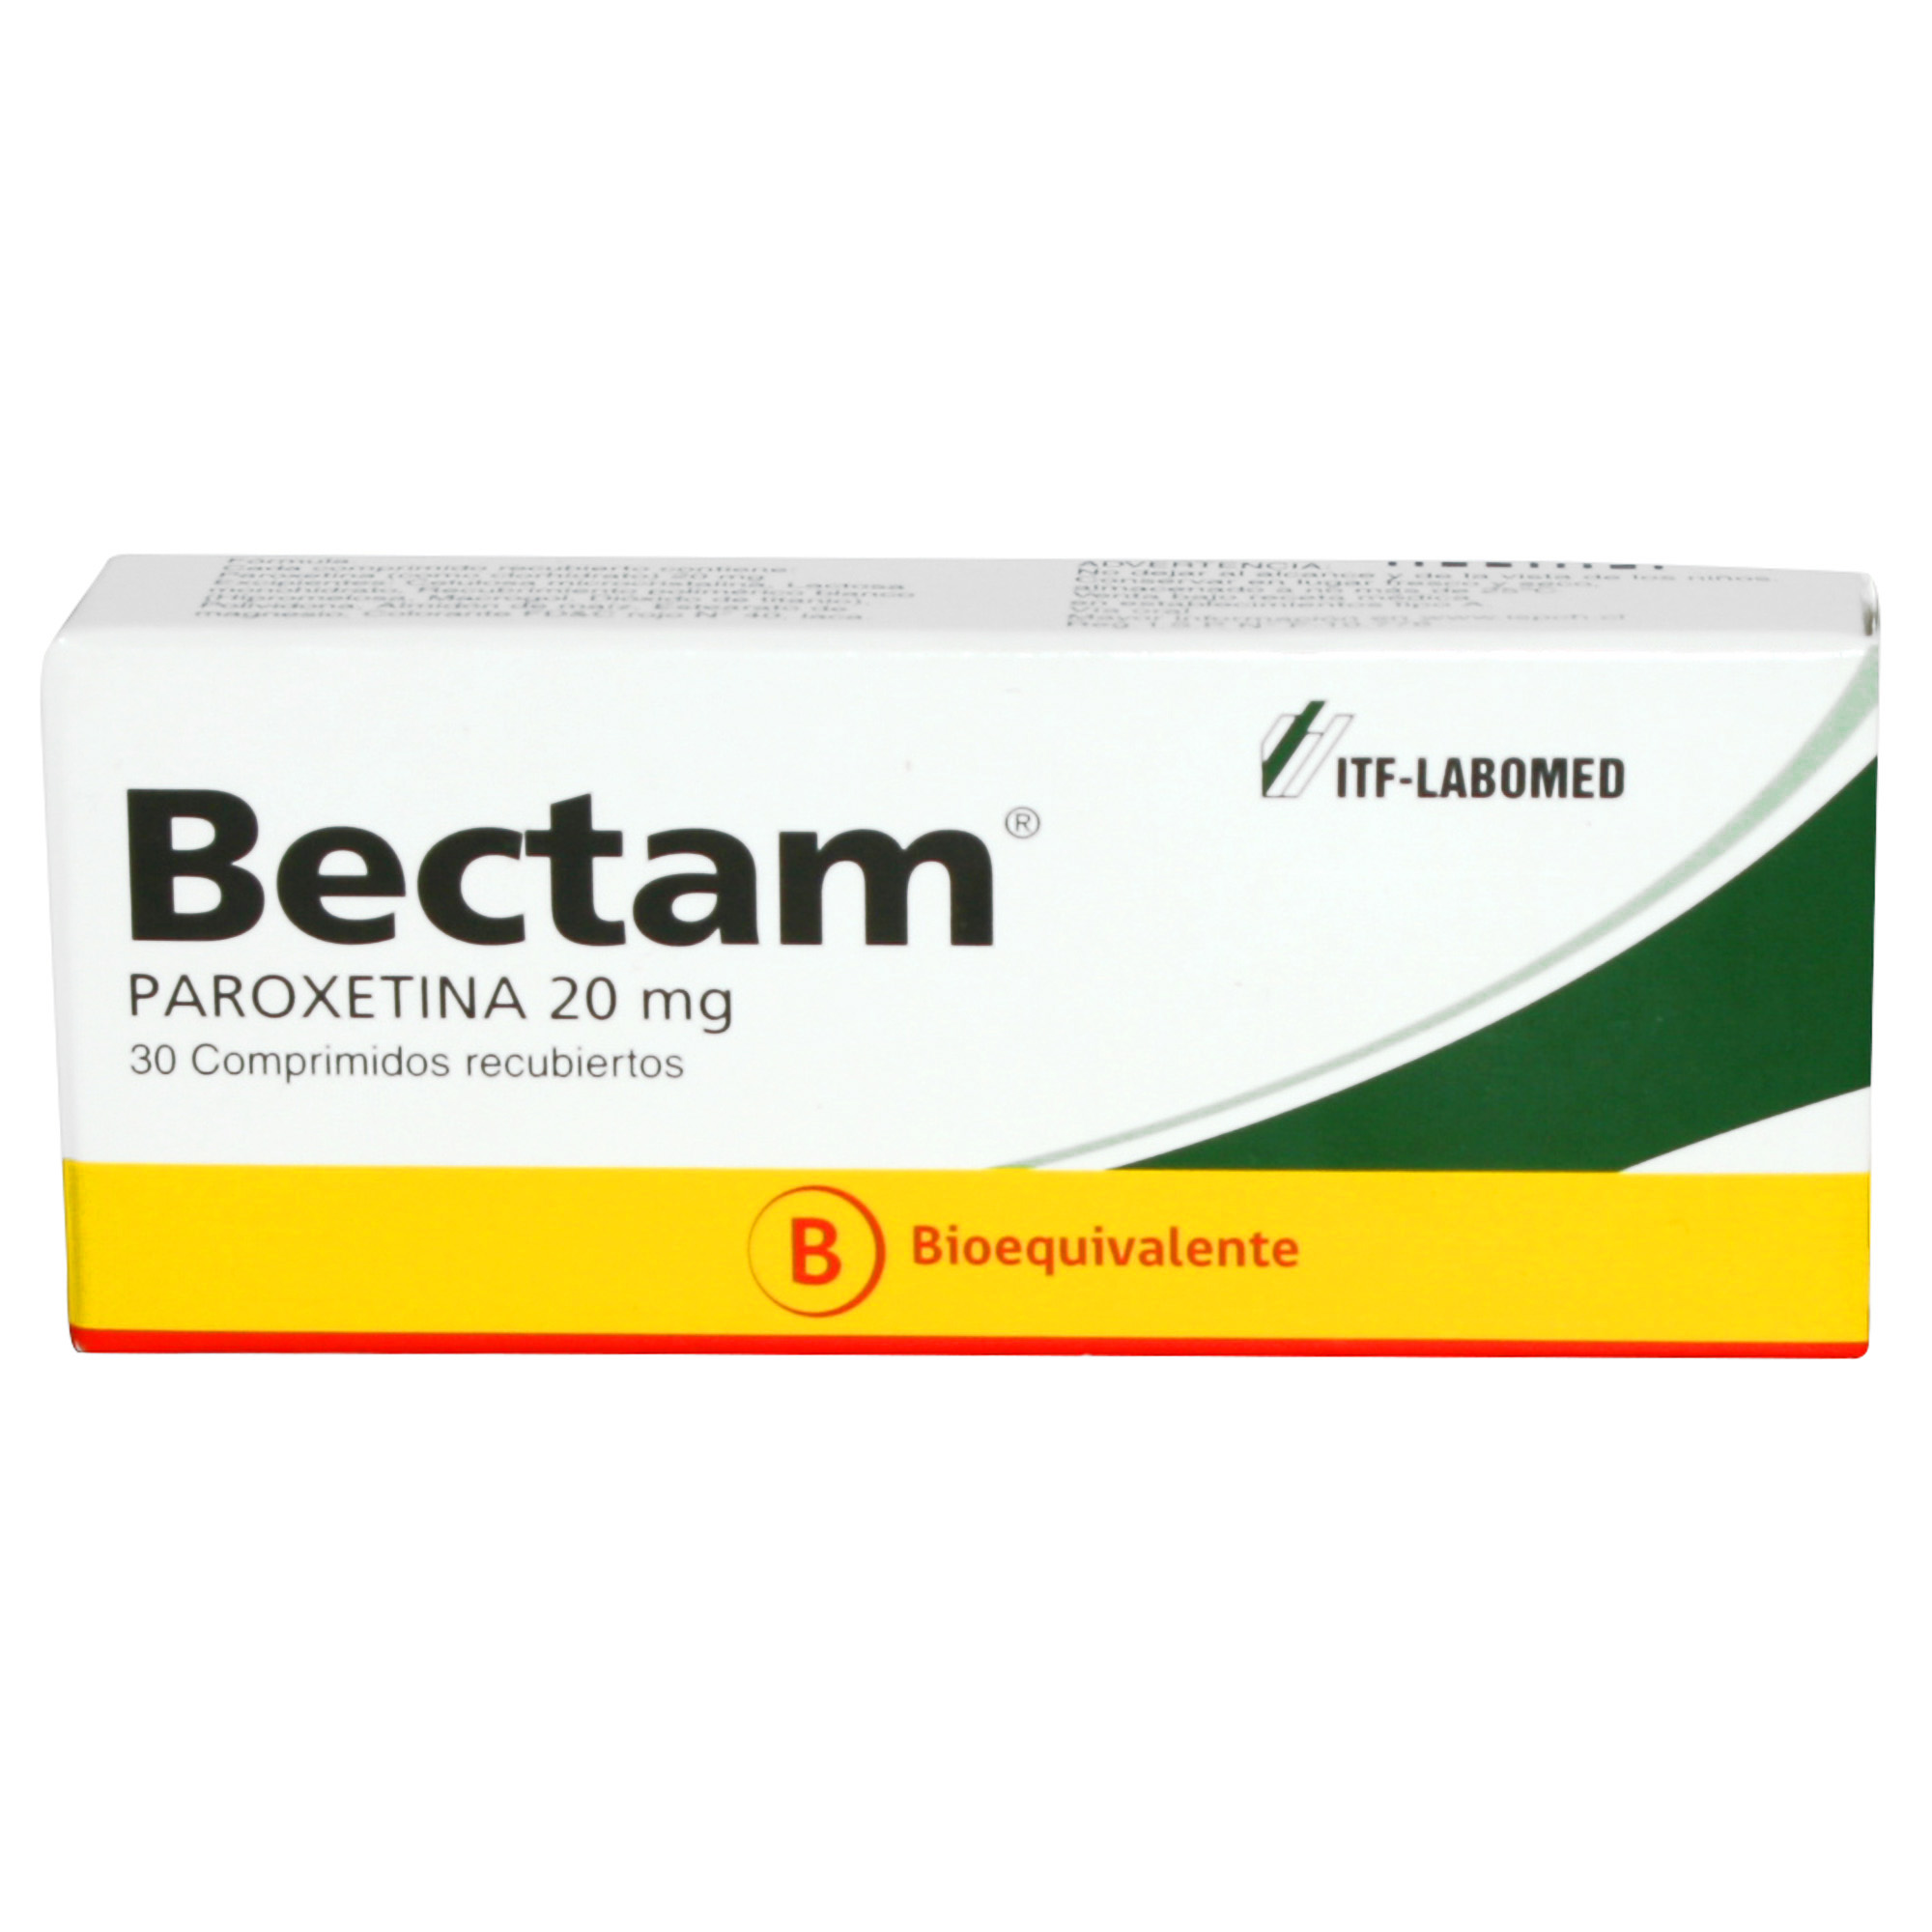 Bectam Paroxetina 20 mg 30 Comprimidos | Farmacias Cruz Verde